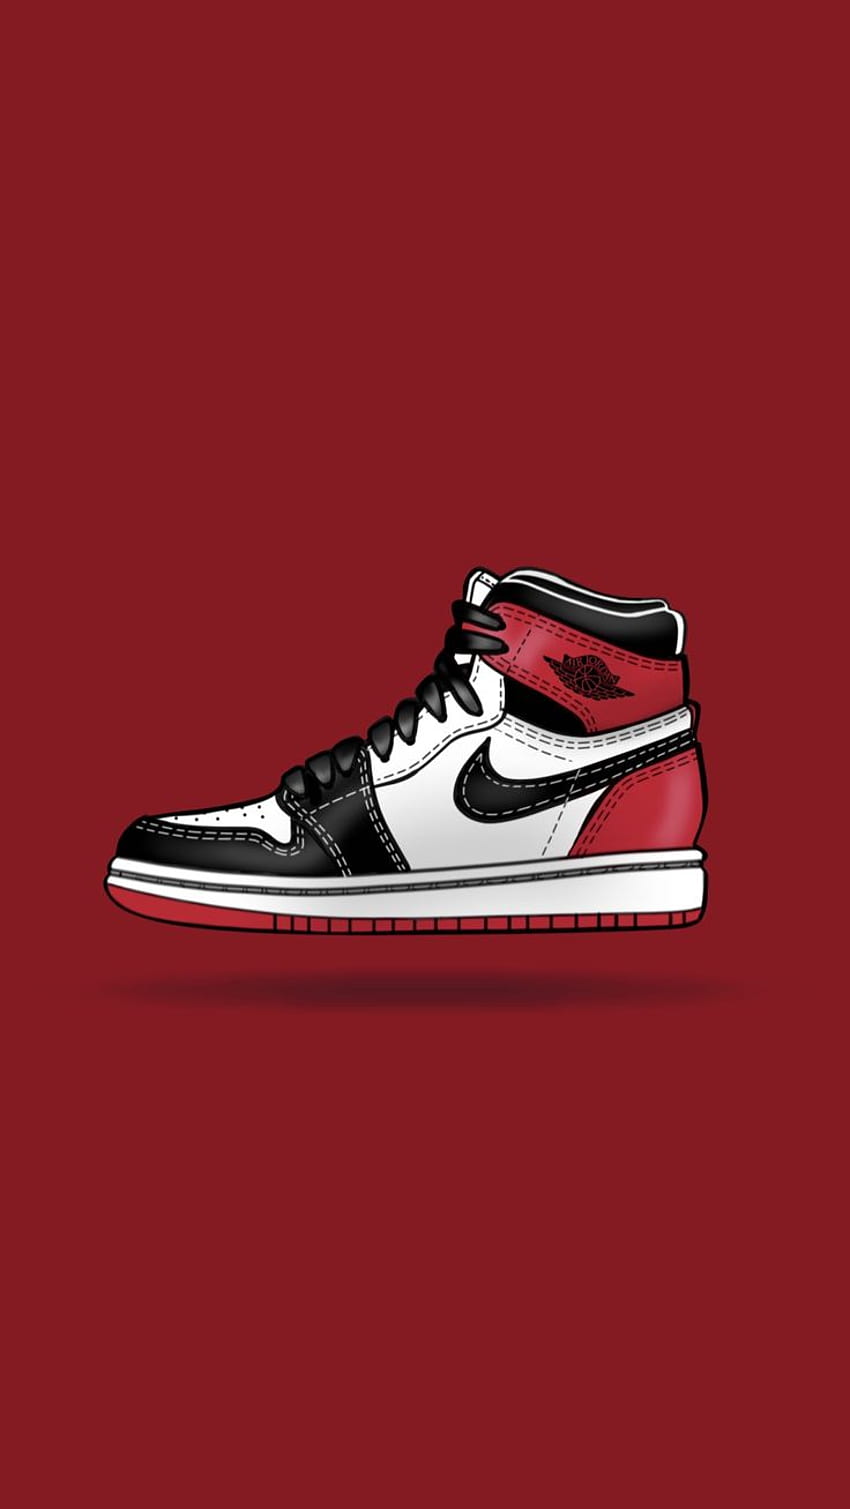 Jordan 1 Classic - Vermelho. Sapatos , Tênis , Sapatos Jordan , Sapatos Red Jordan Papel de parede de celular HD